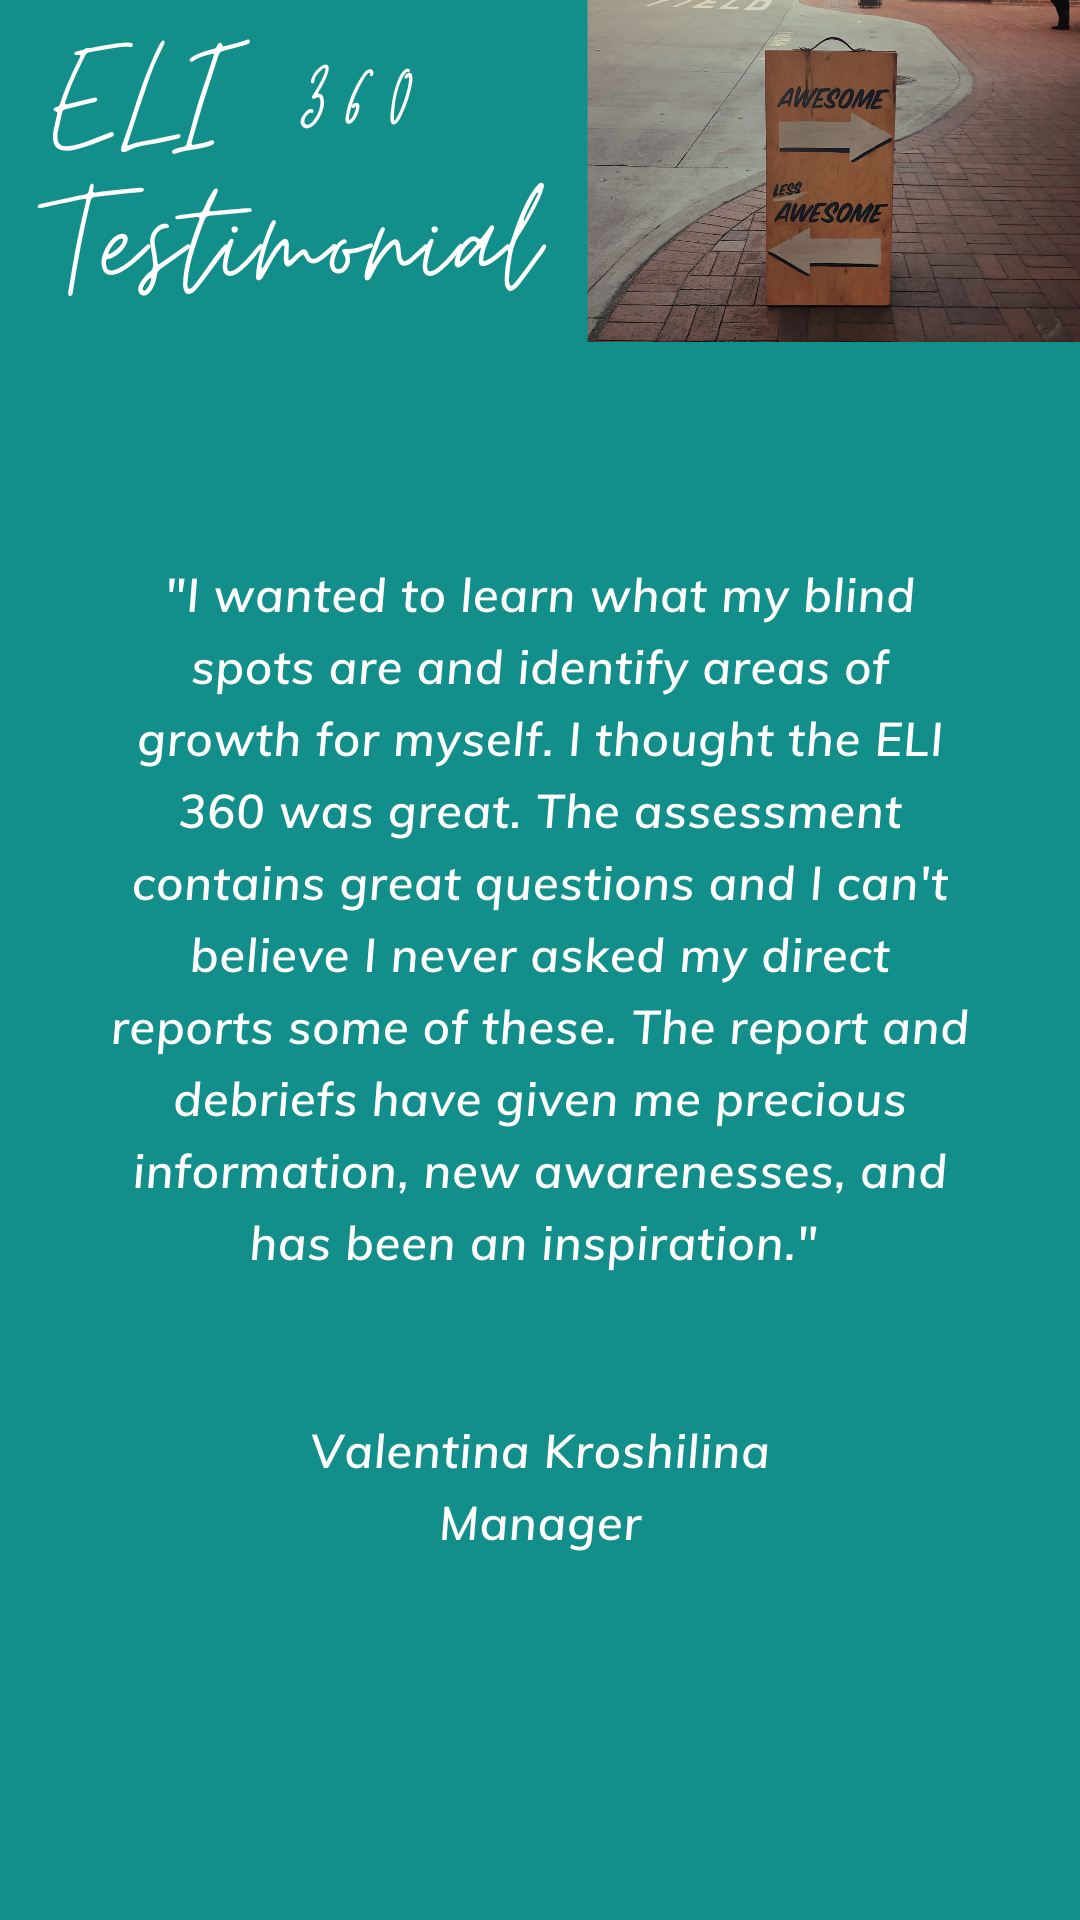 SSCC ELI 360 Testimonial - Valentina Kroshilina.png